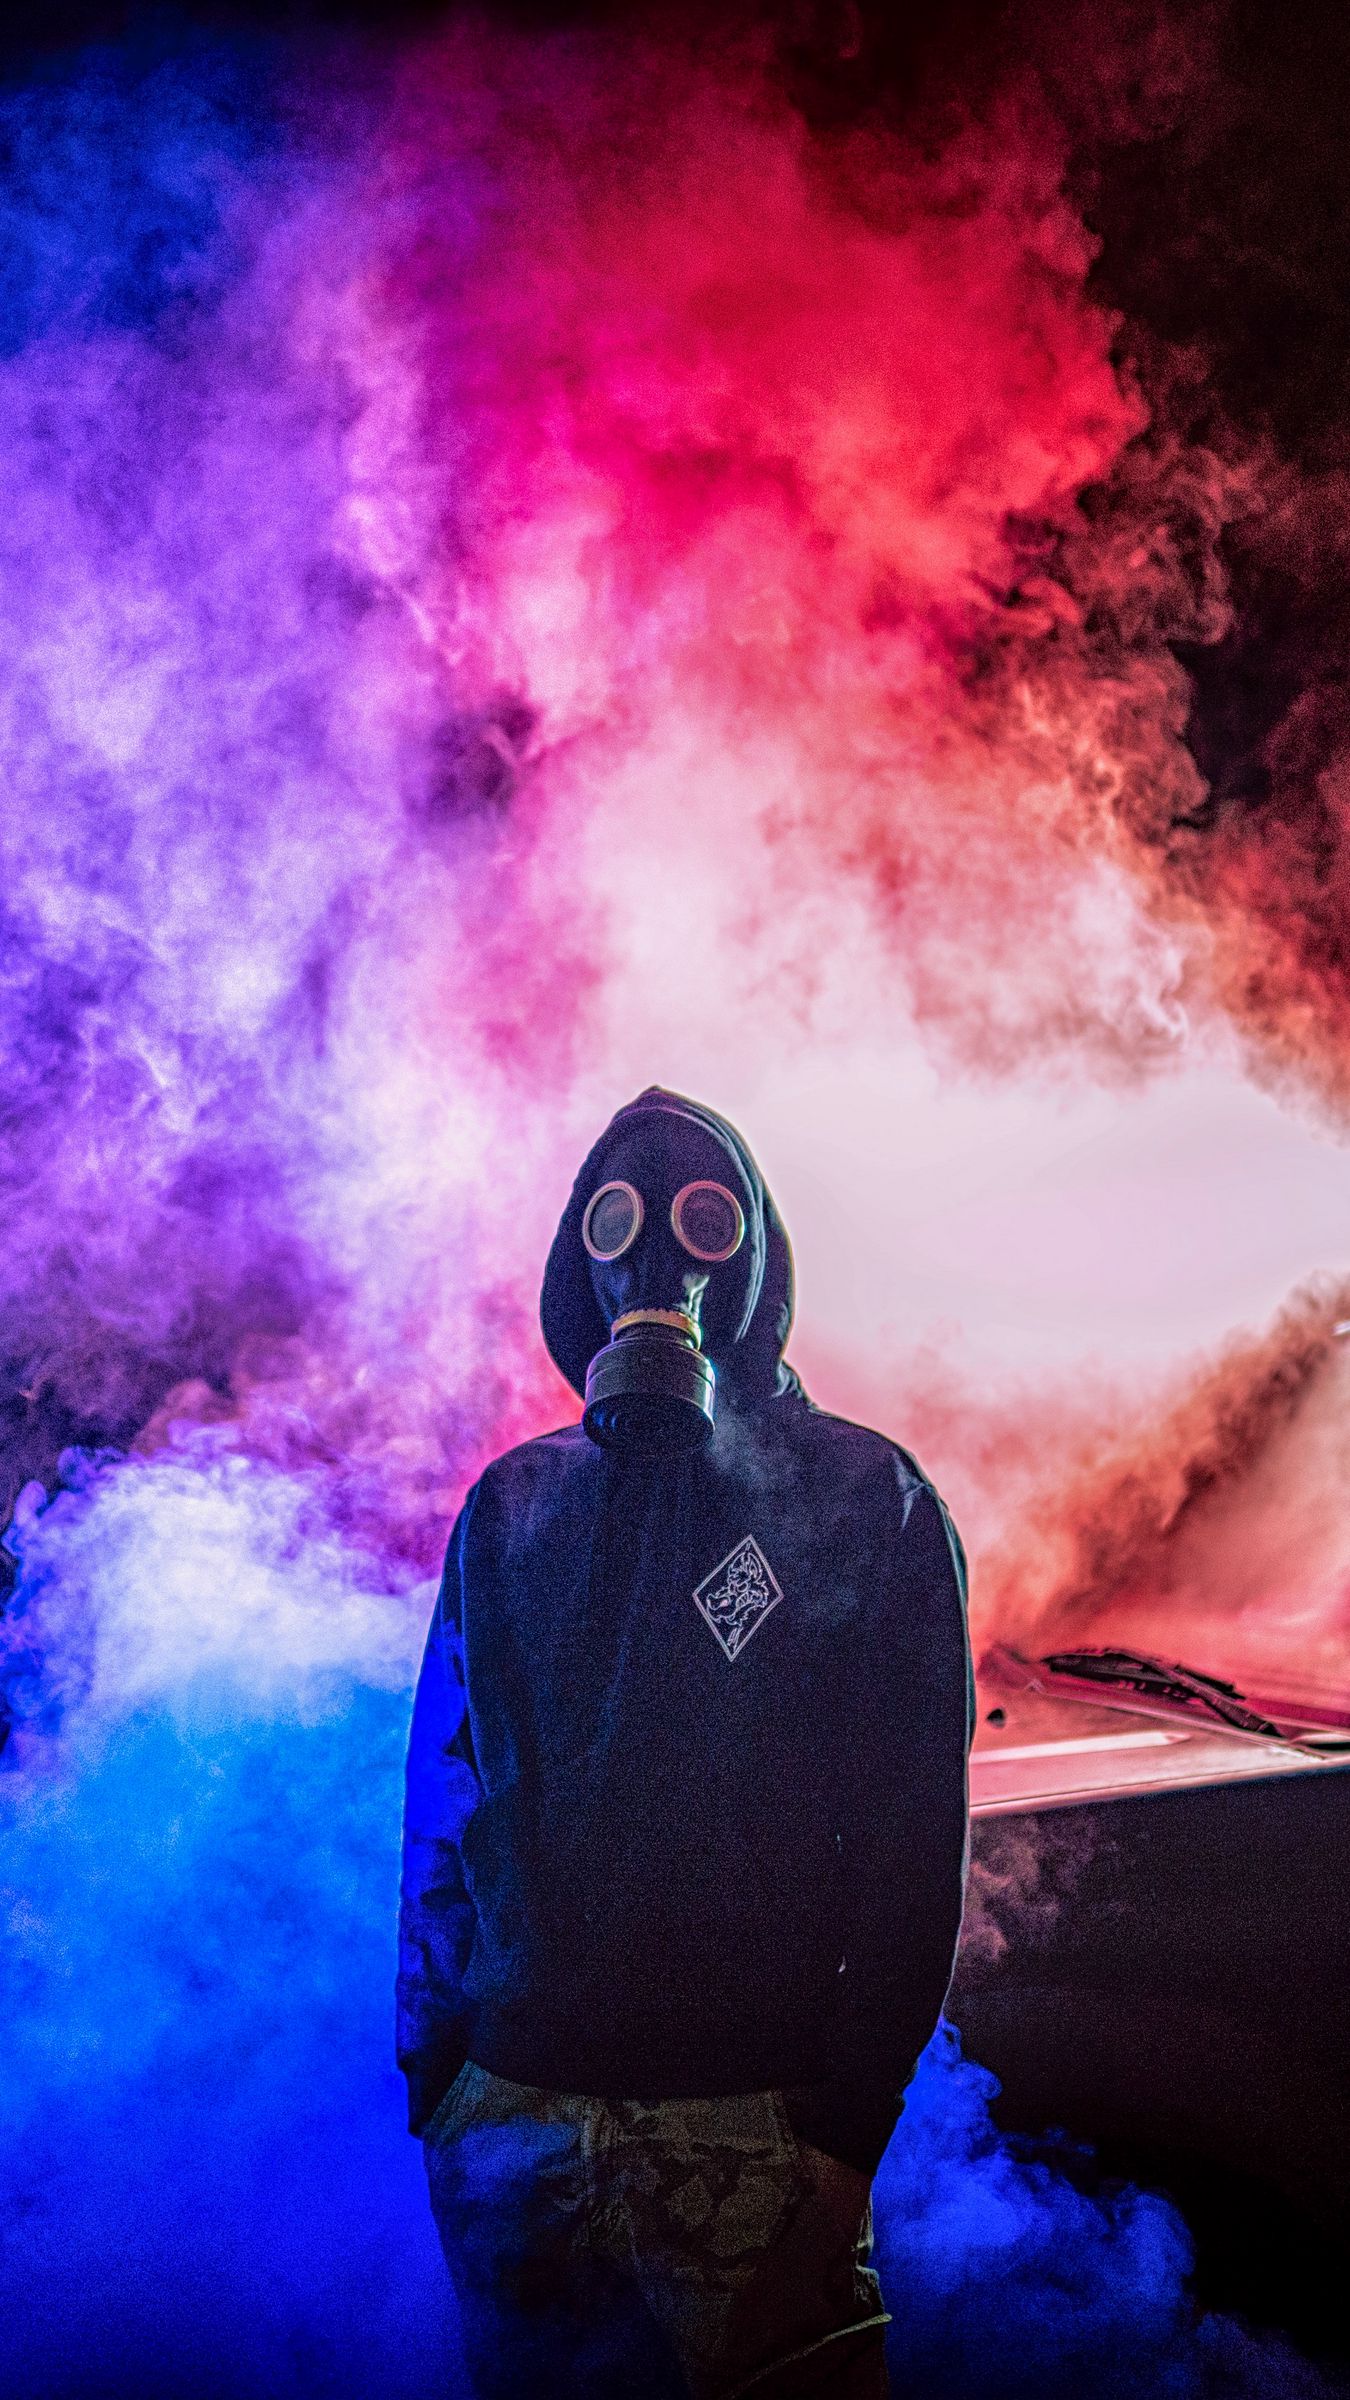 mask man wallpaper,personal protective equipment,gas mask,mask,smoke,costume